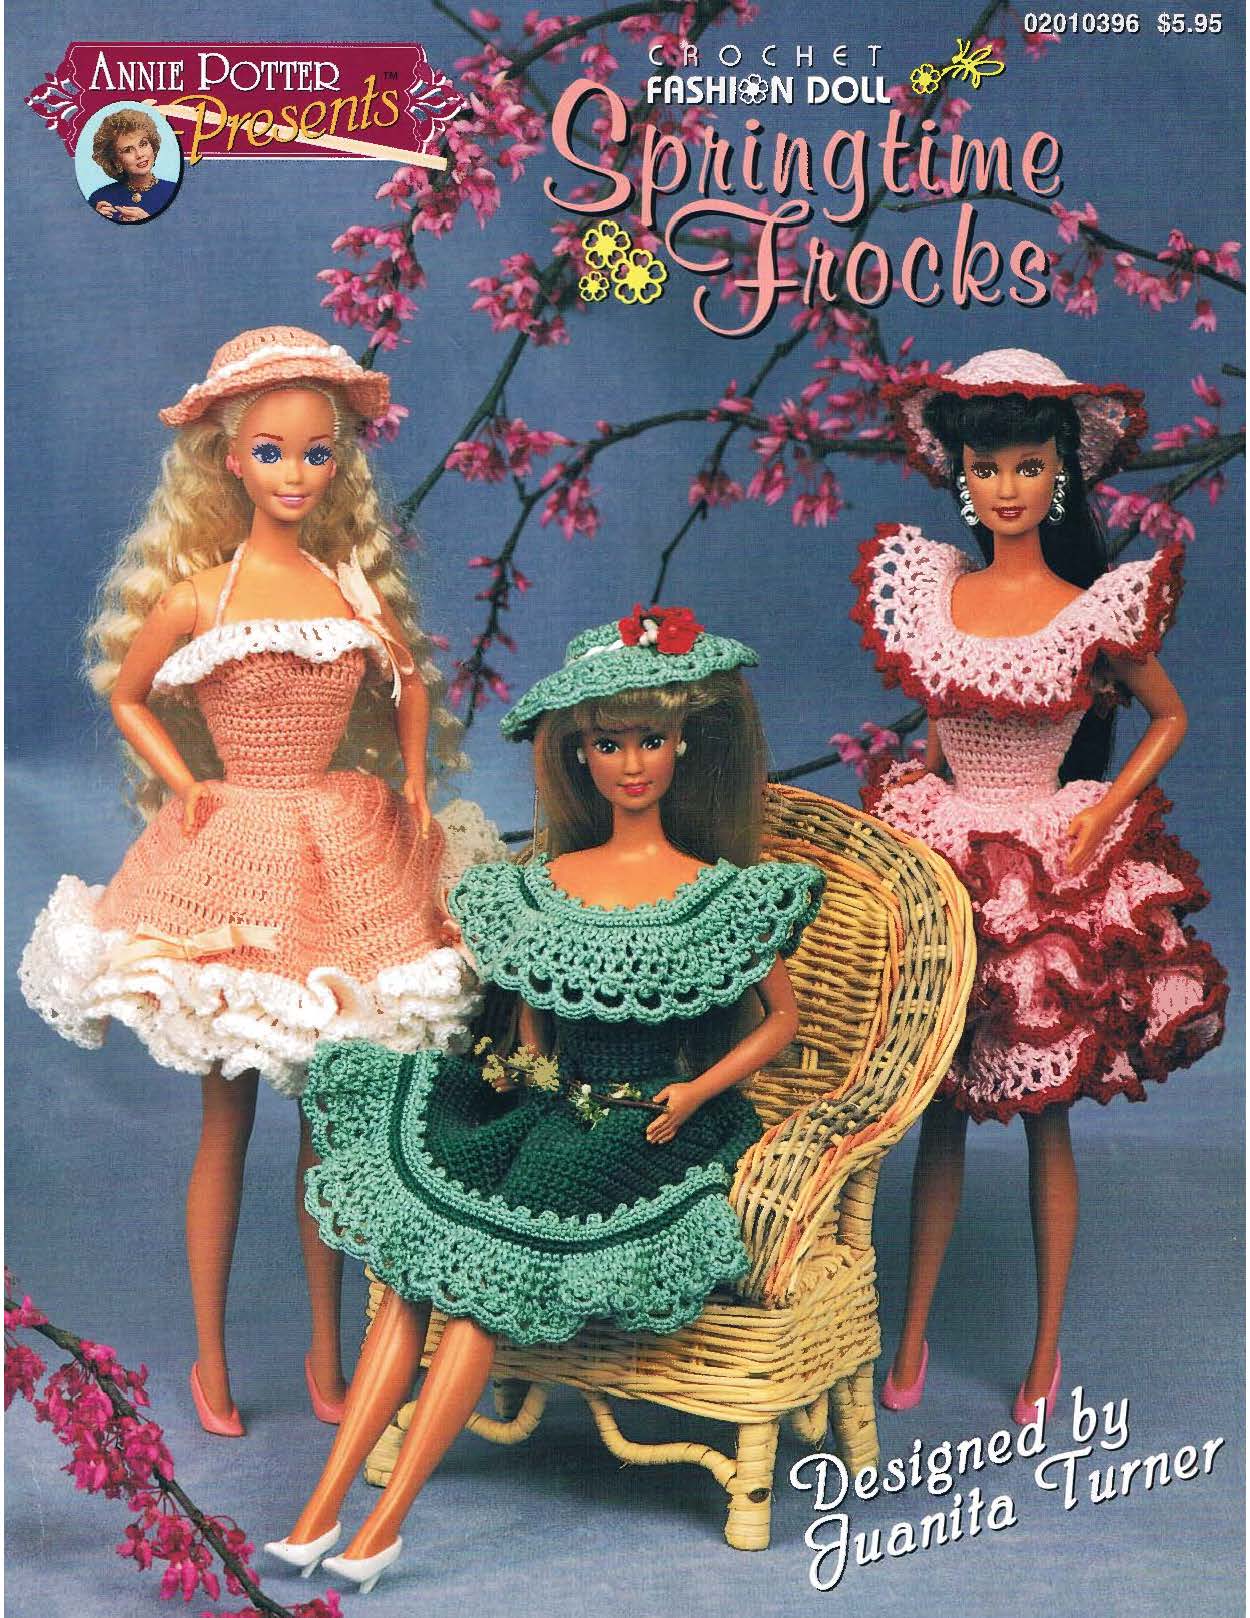 Springtime Frocks for Fashion Doll